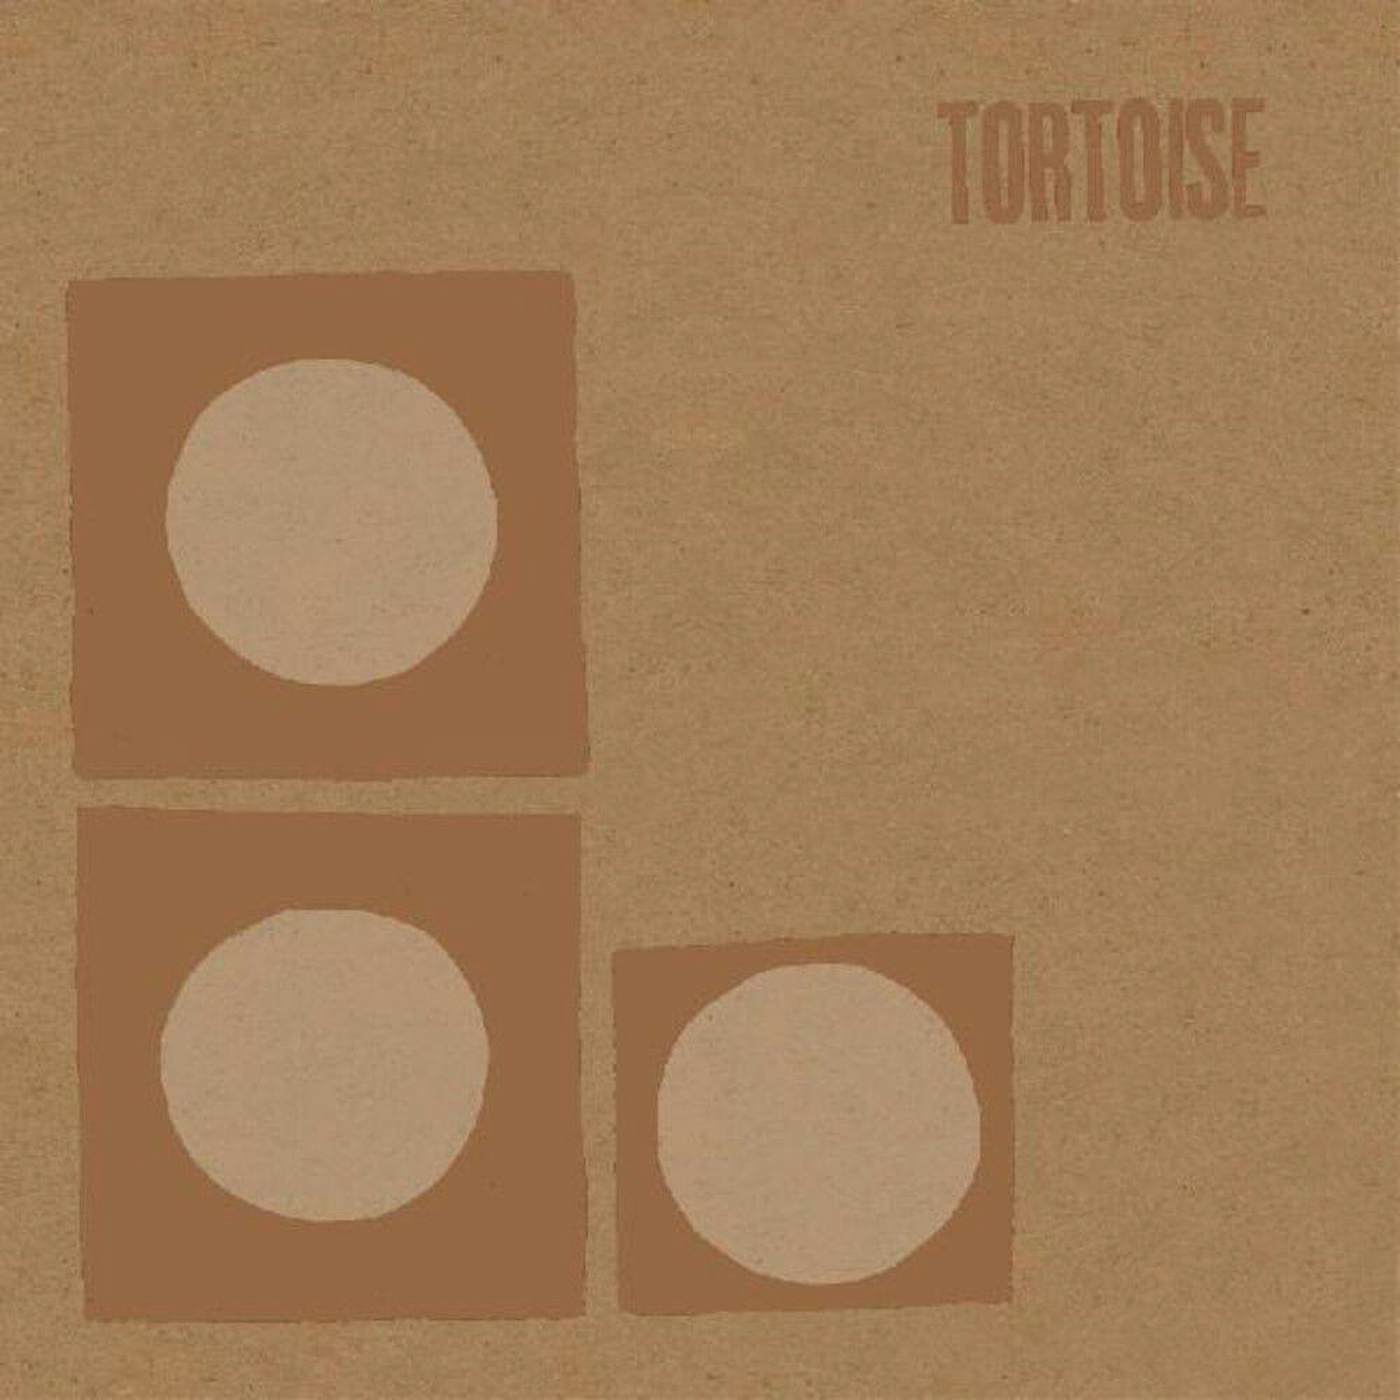 Tortoise S/T (White & Black Swirl) (I) Vinyl Record